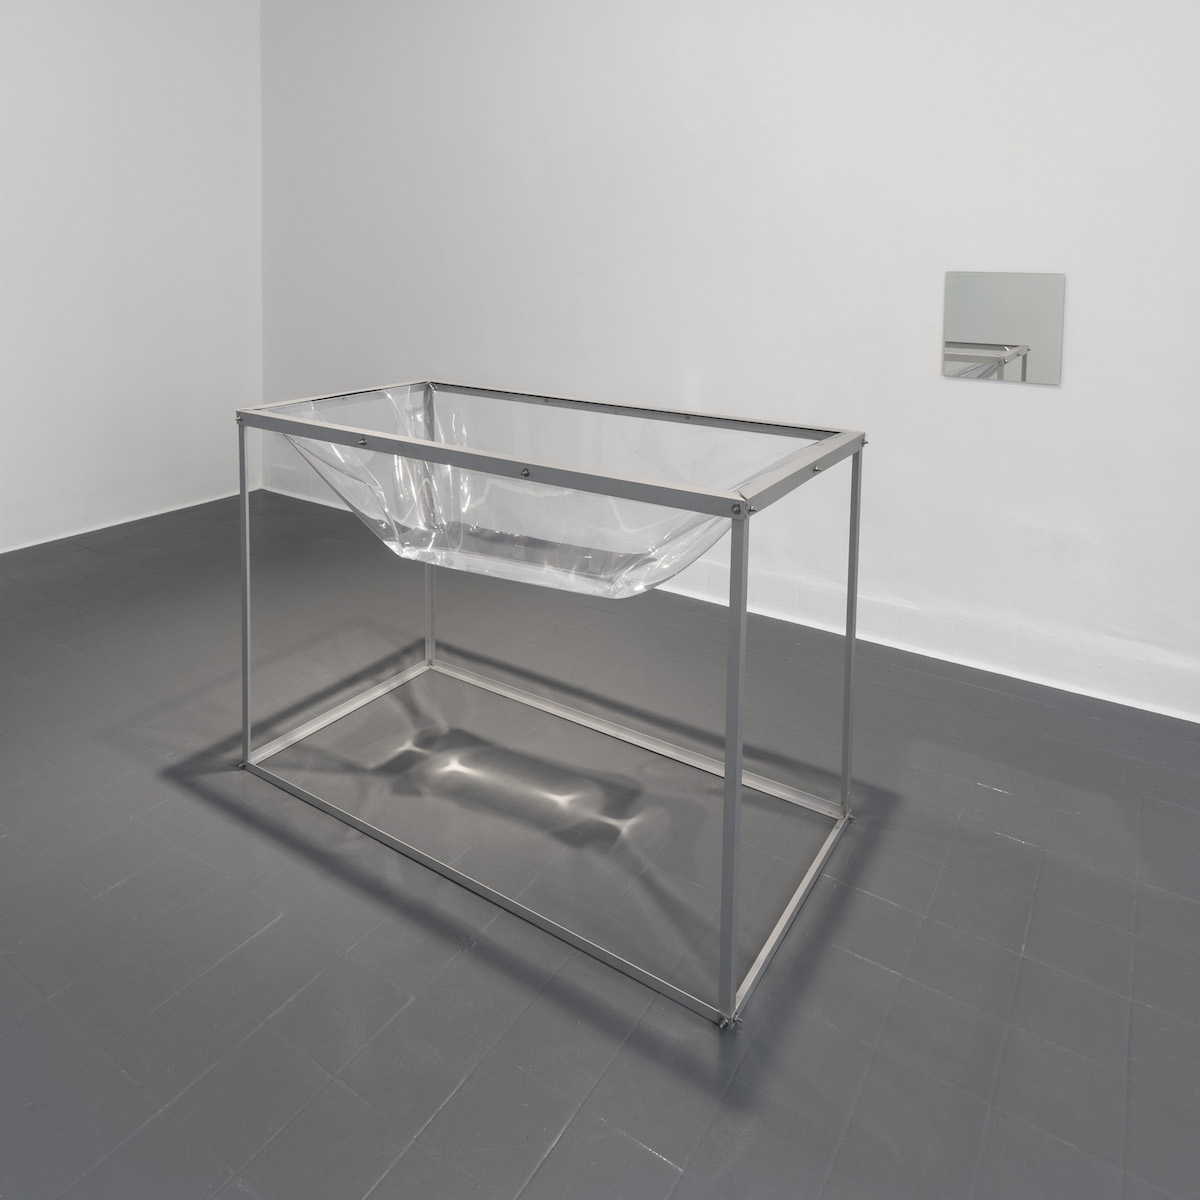 Adam Fearon, Vessel, 2019, Aluminium, PVC, Water, Mirror, 80 x 60 x 120 cm. Copyright the Artist. Photography Roland Paschhoff.